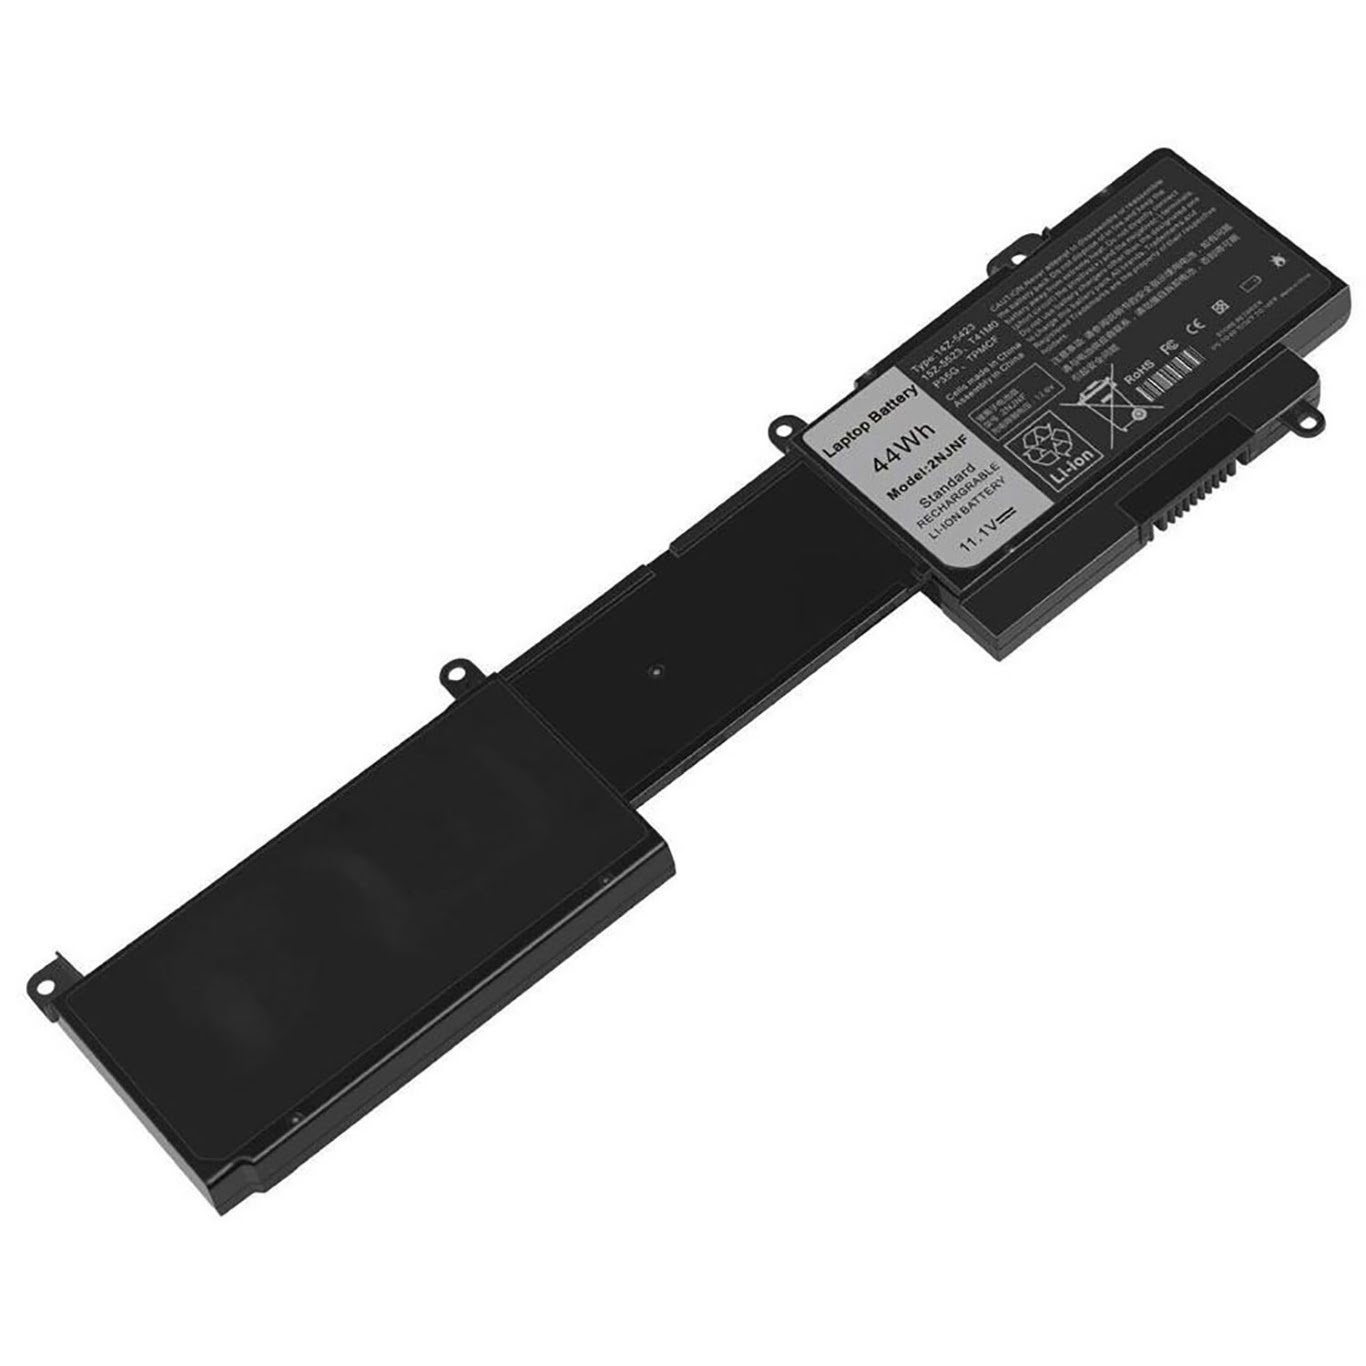 2NJNF, 8JVDG replacement Laptop Battery for Dell Inspiron 14z, Inspiron 14z (5423), 11.1 V, 44wh